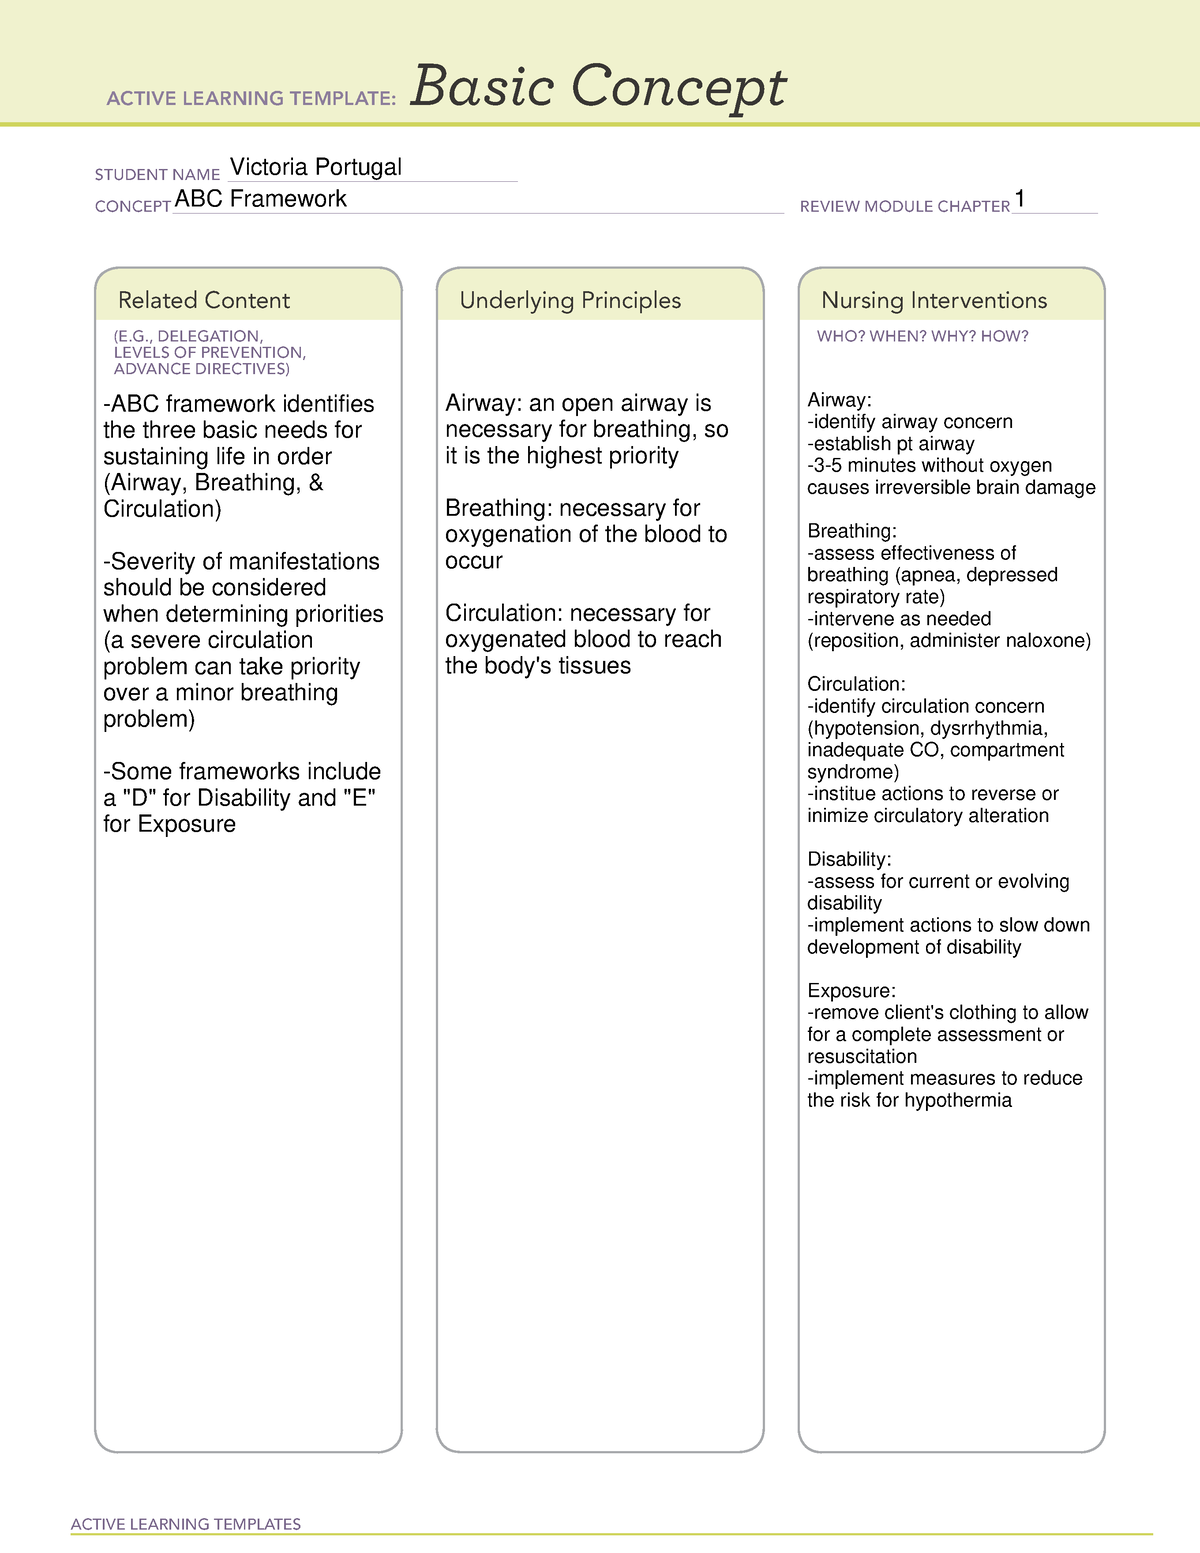 abc-framework-basic-concept-active-learning-templates-basic-concept